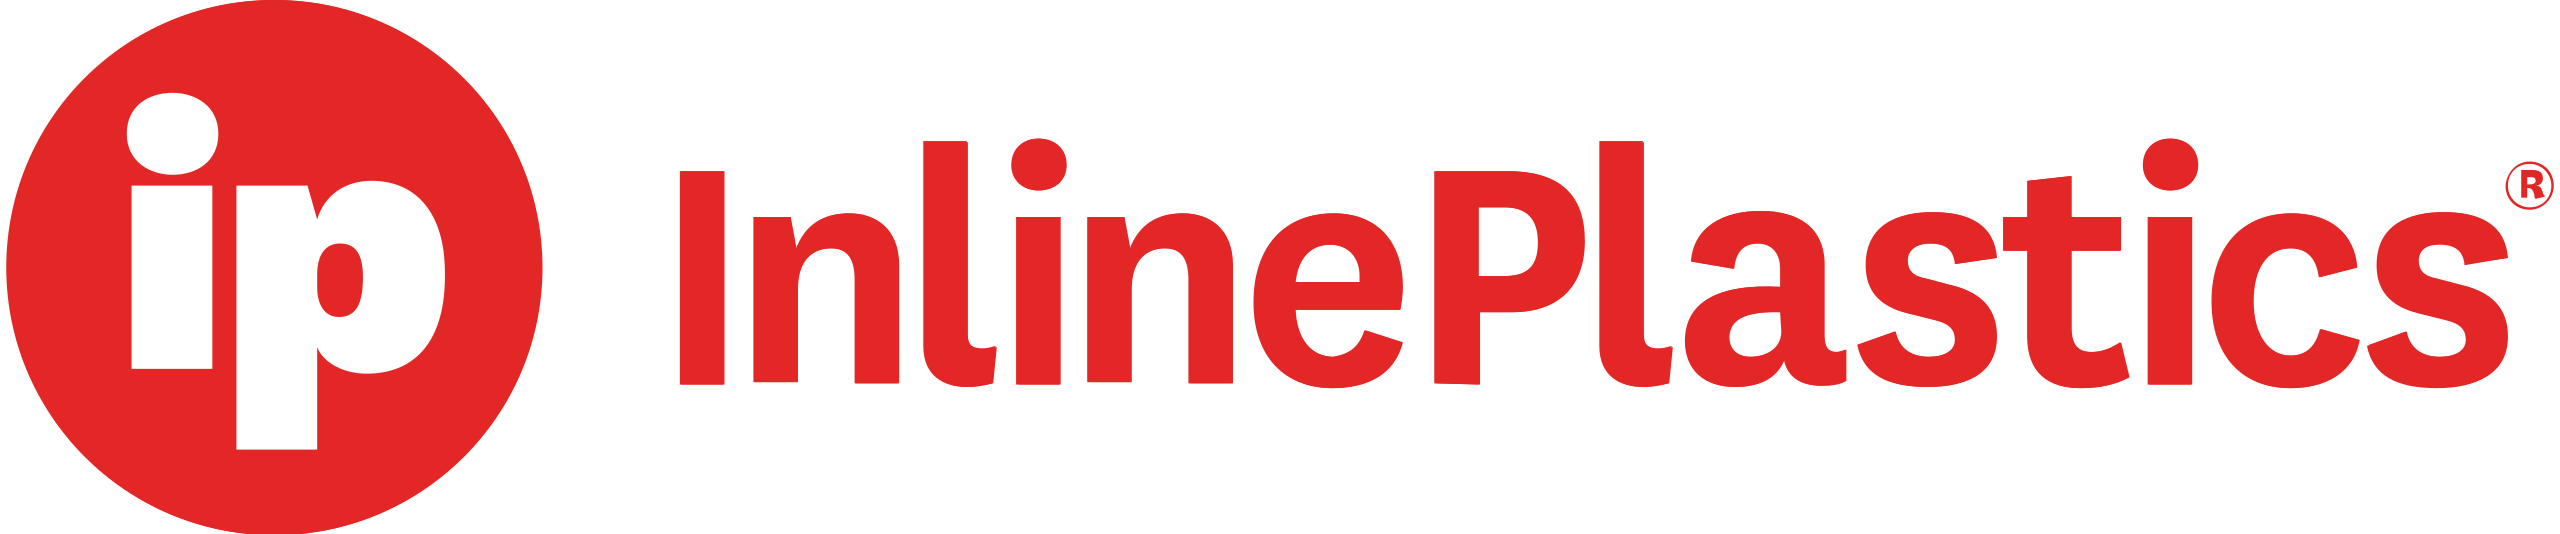 #21 Inline Plastics Logo-2